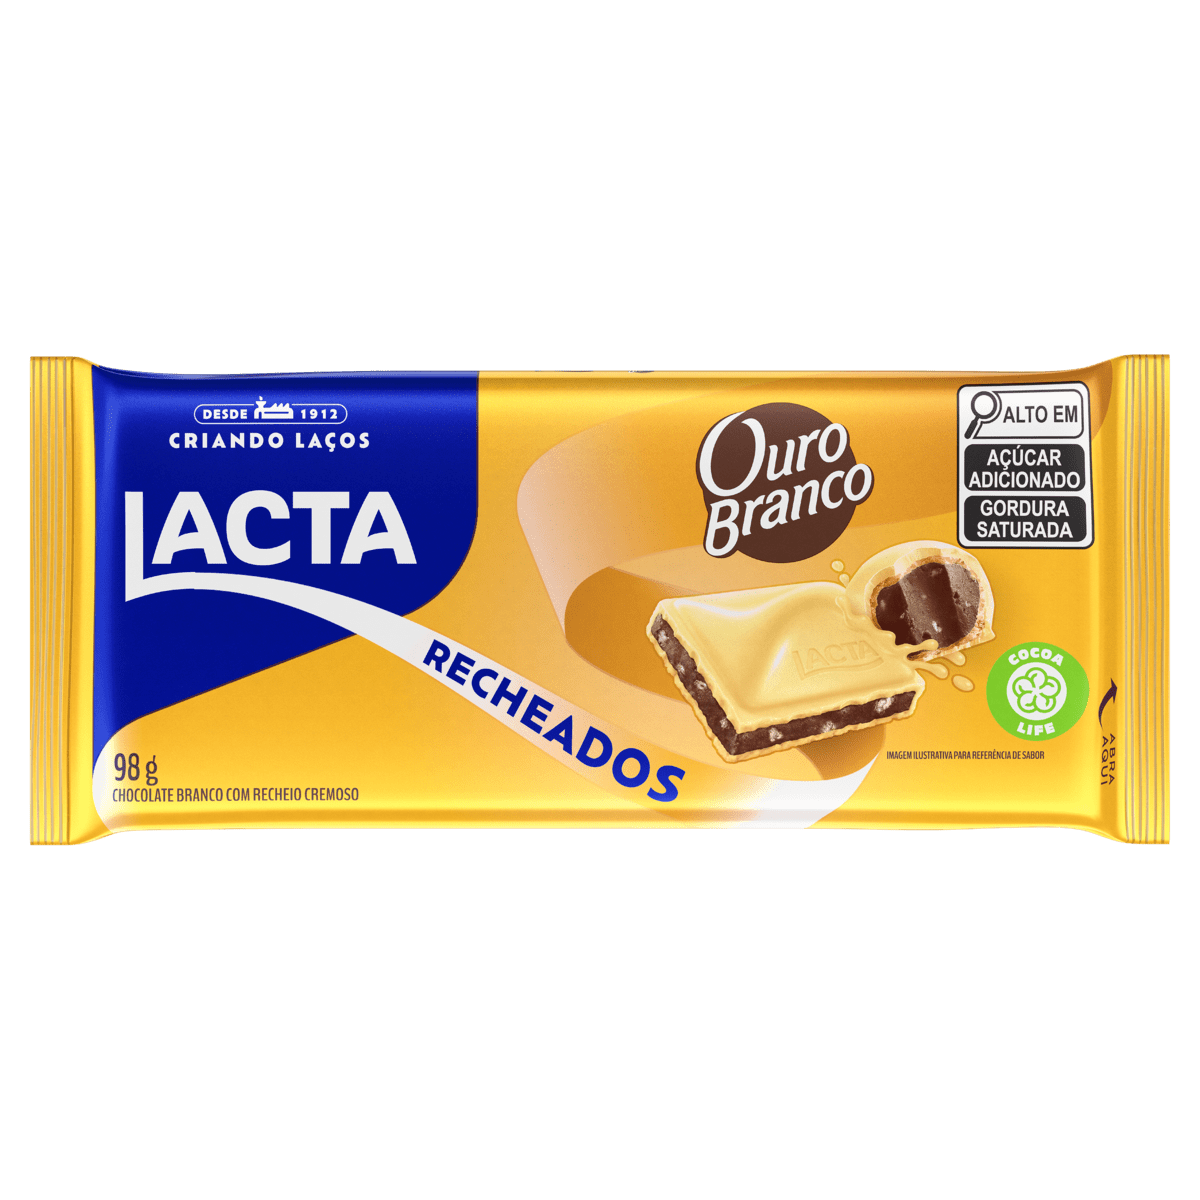 LACTA - Ouro Branco Chocolate filled bar - 98g